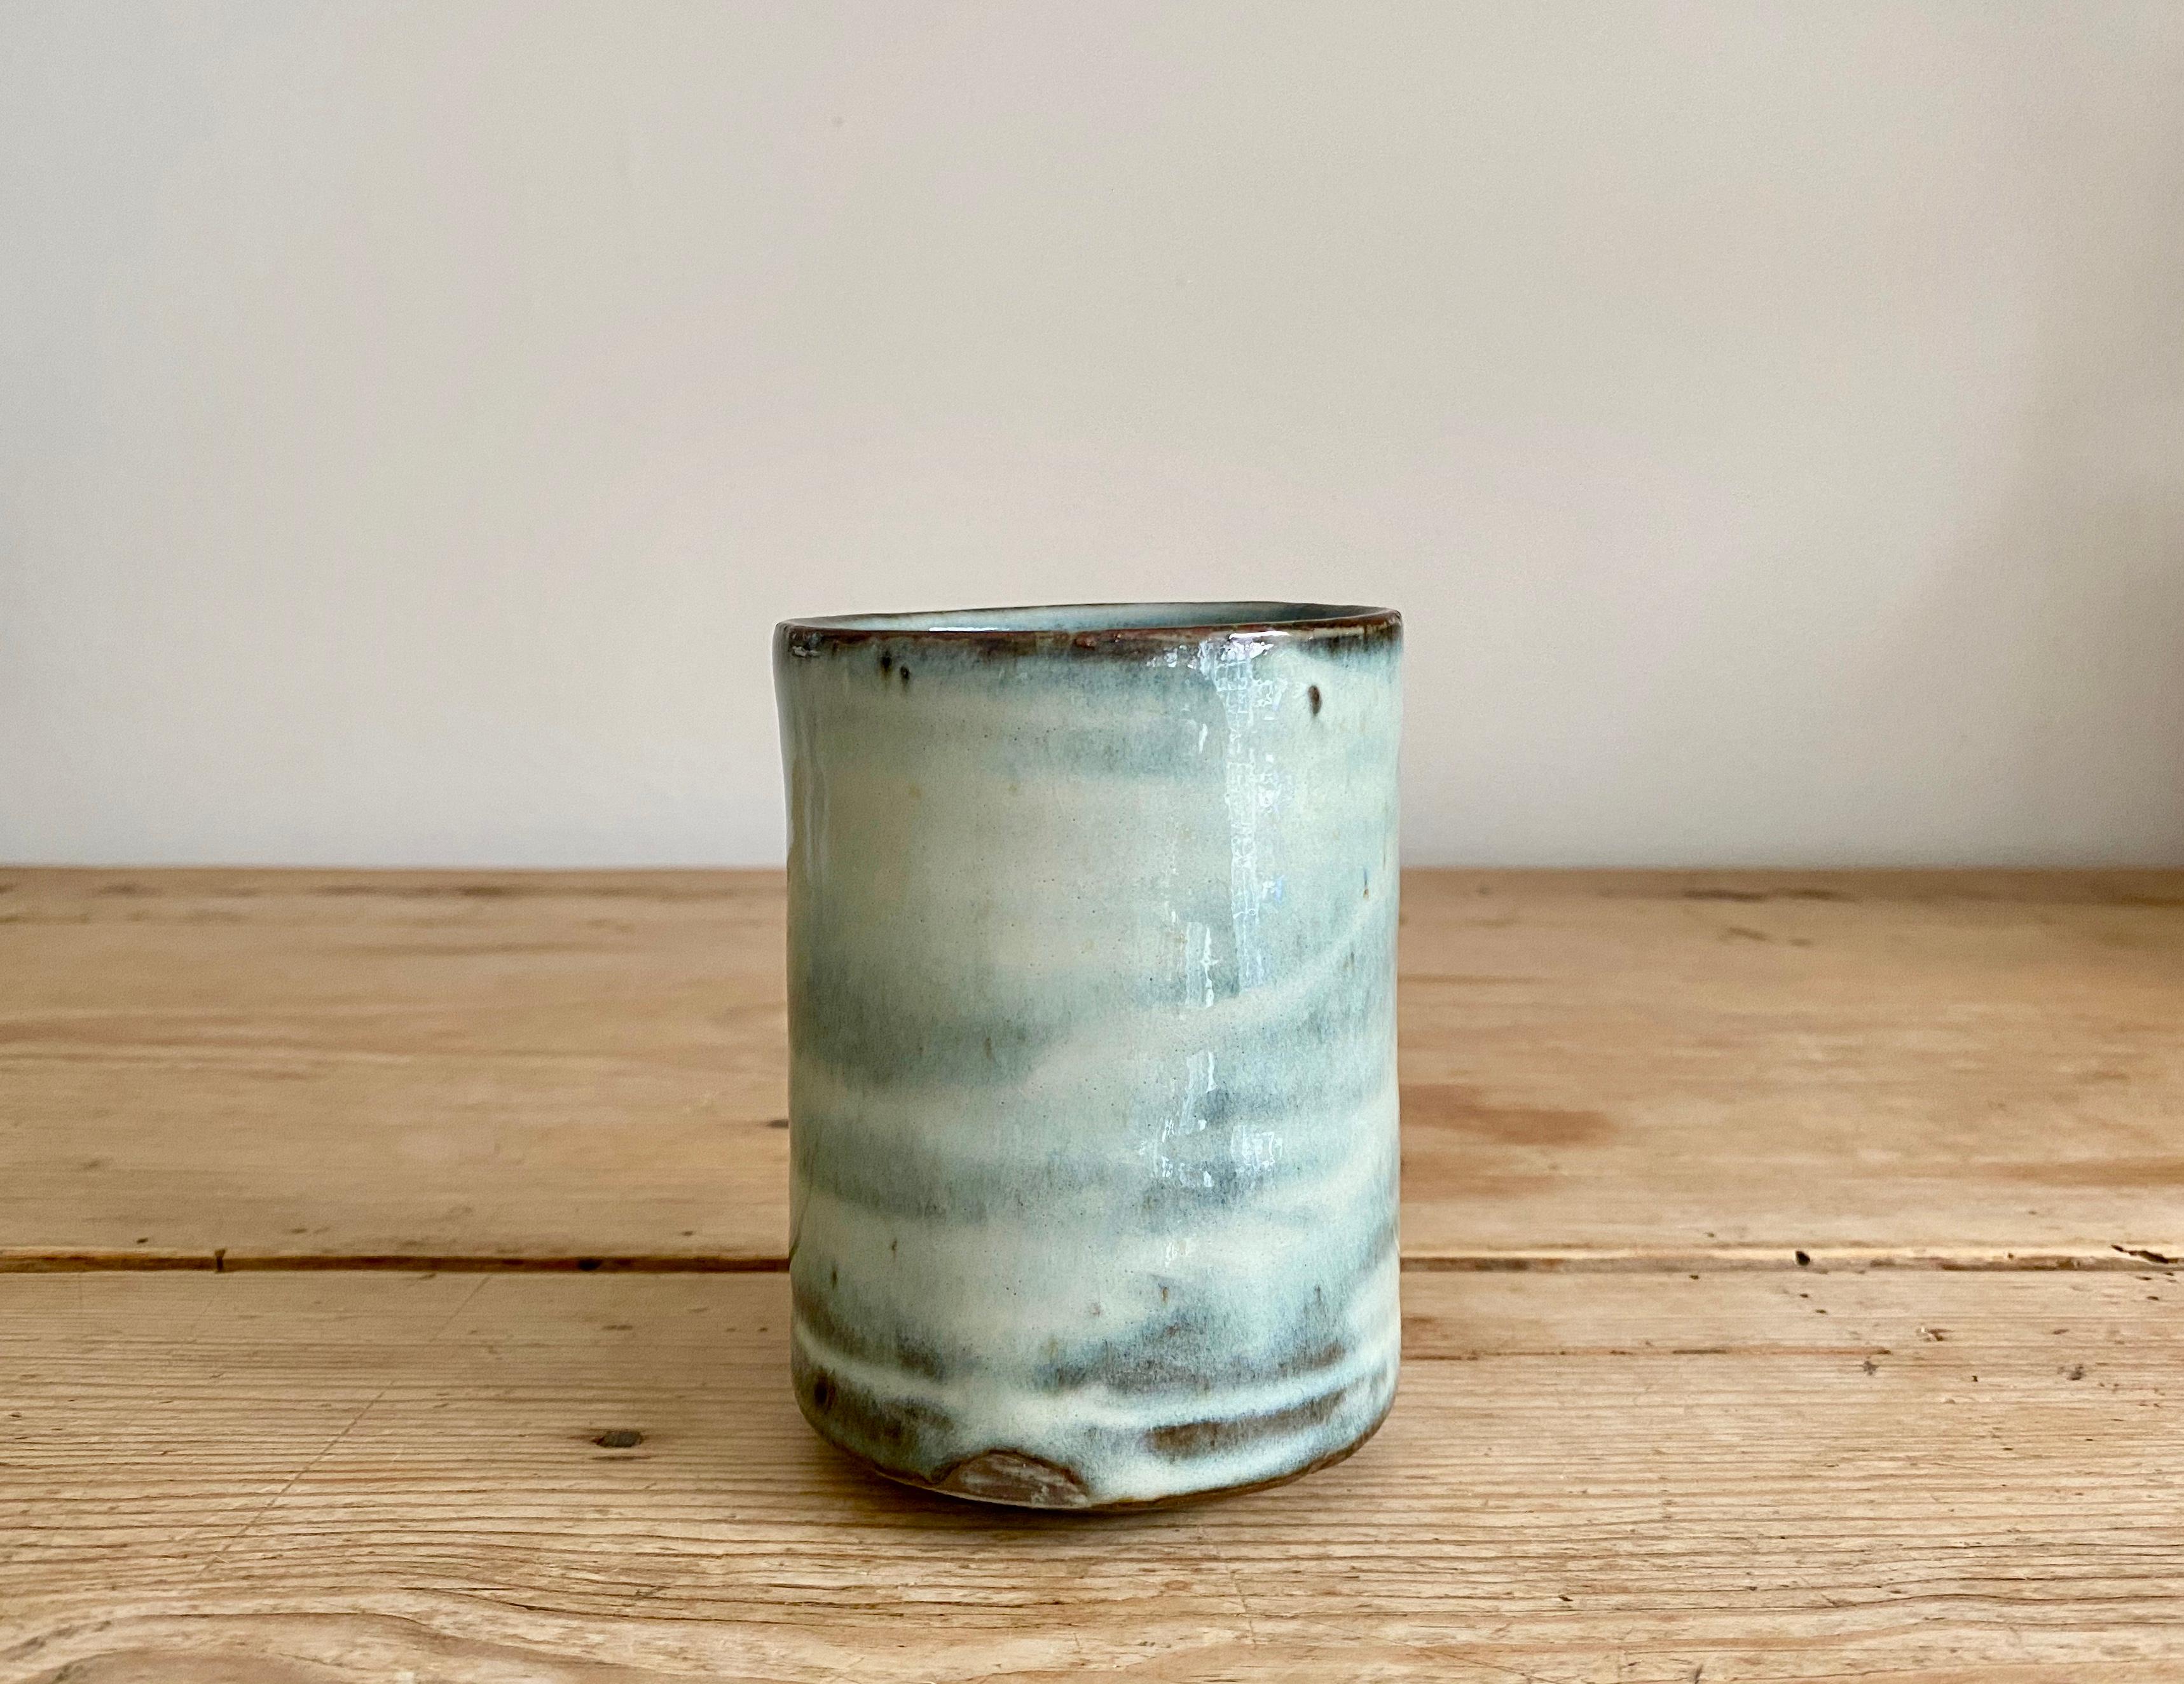 Stoneware teacup with nuka glaze 

Handmade by Mats Svensson

Sweden, 2020.